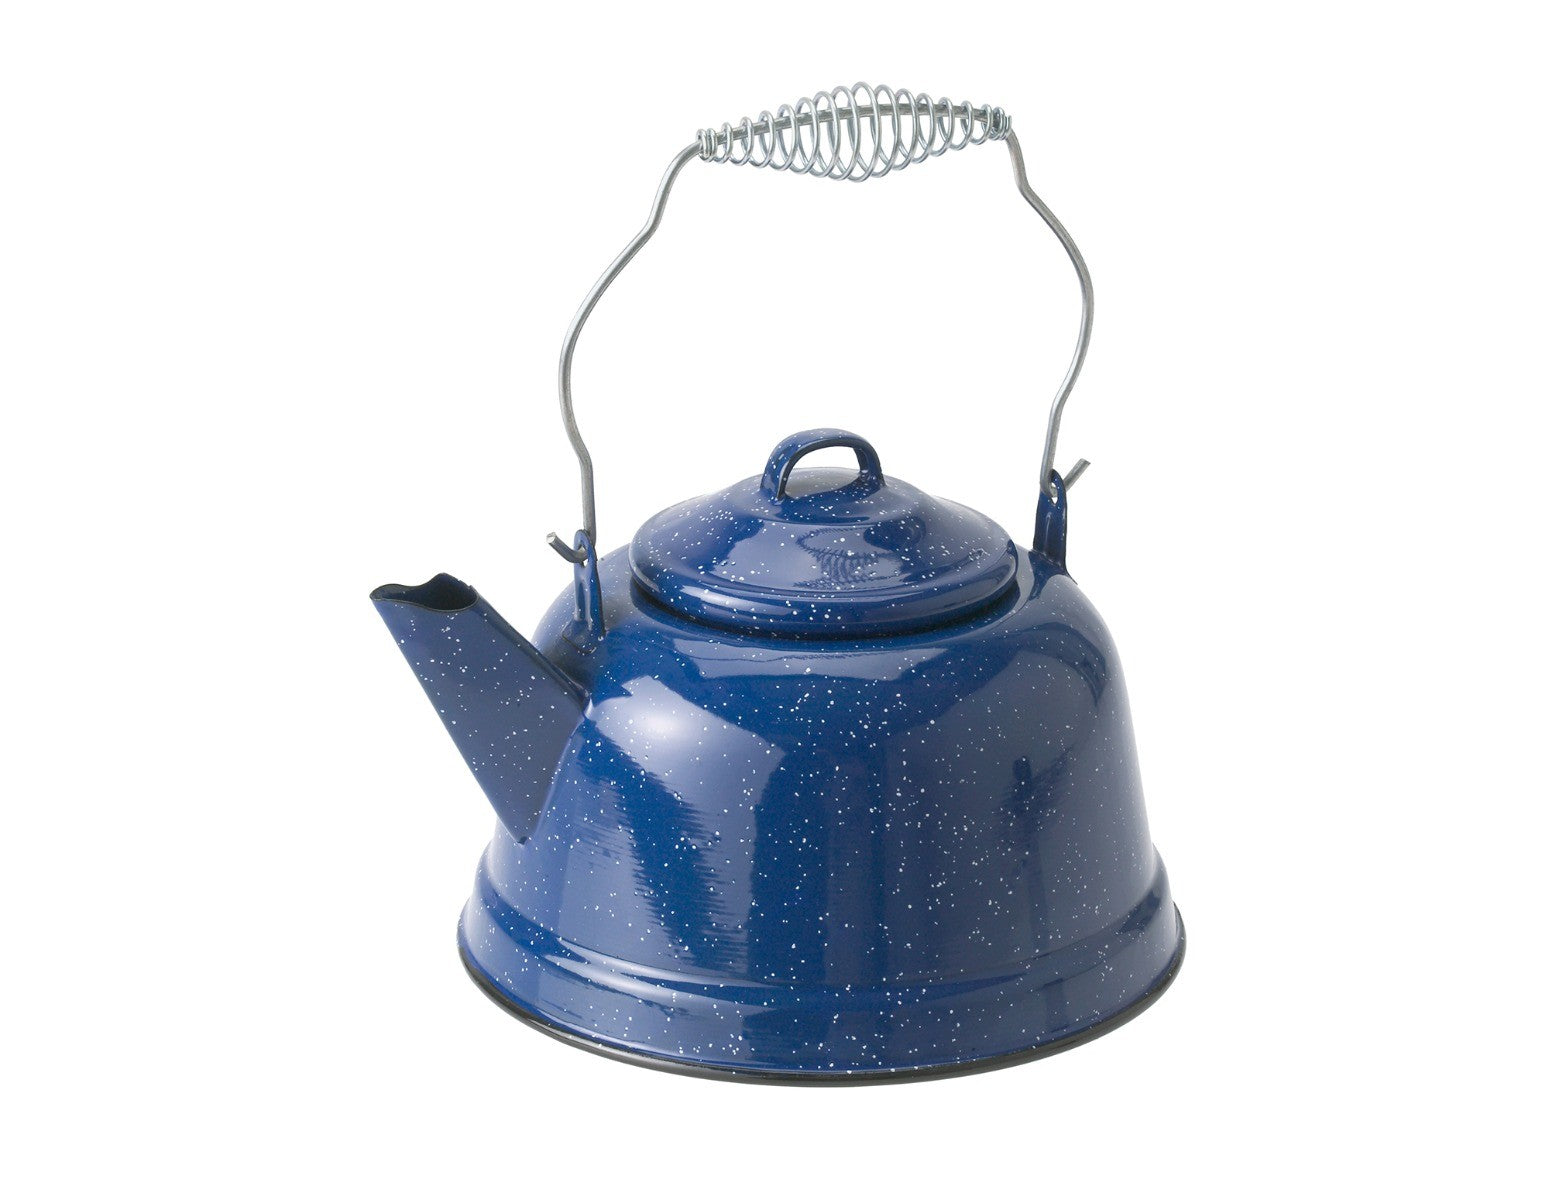 GSI Outdoors Blue Enamelware 10 Cup Tea Kettle with metal handle